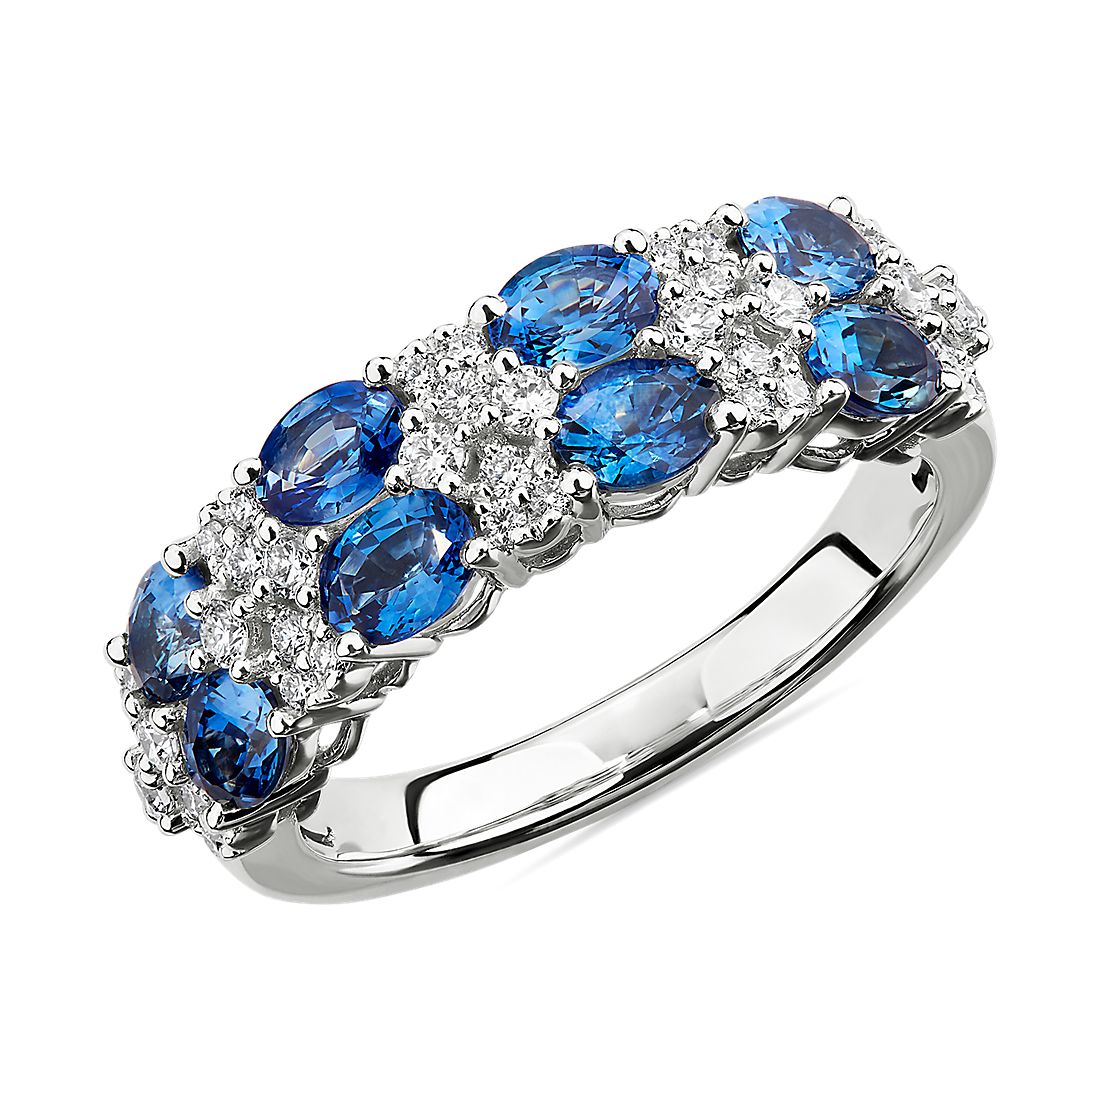 Details about   Women's Oval Blue Sapphire & Round Sim Diamond Designer Ring 14k White Gold Over